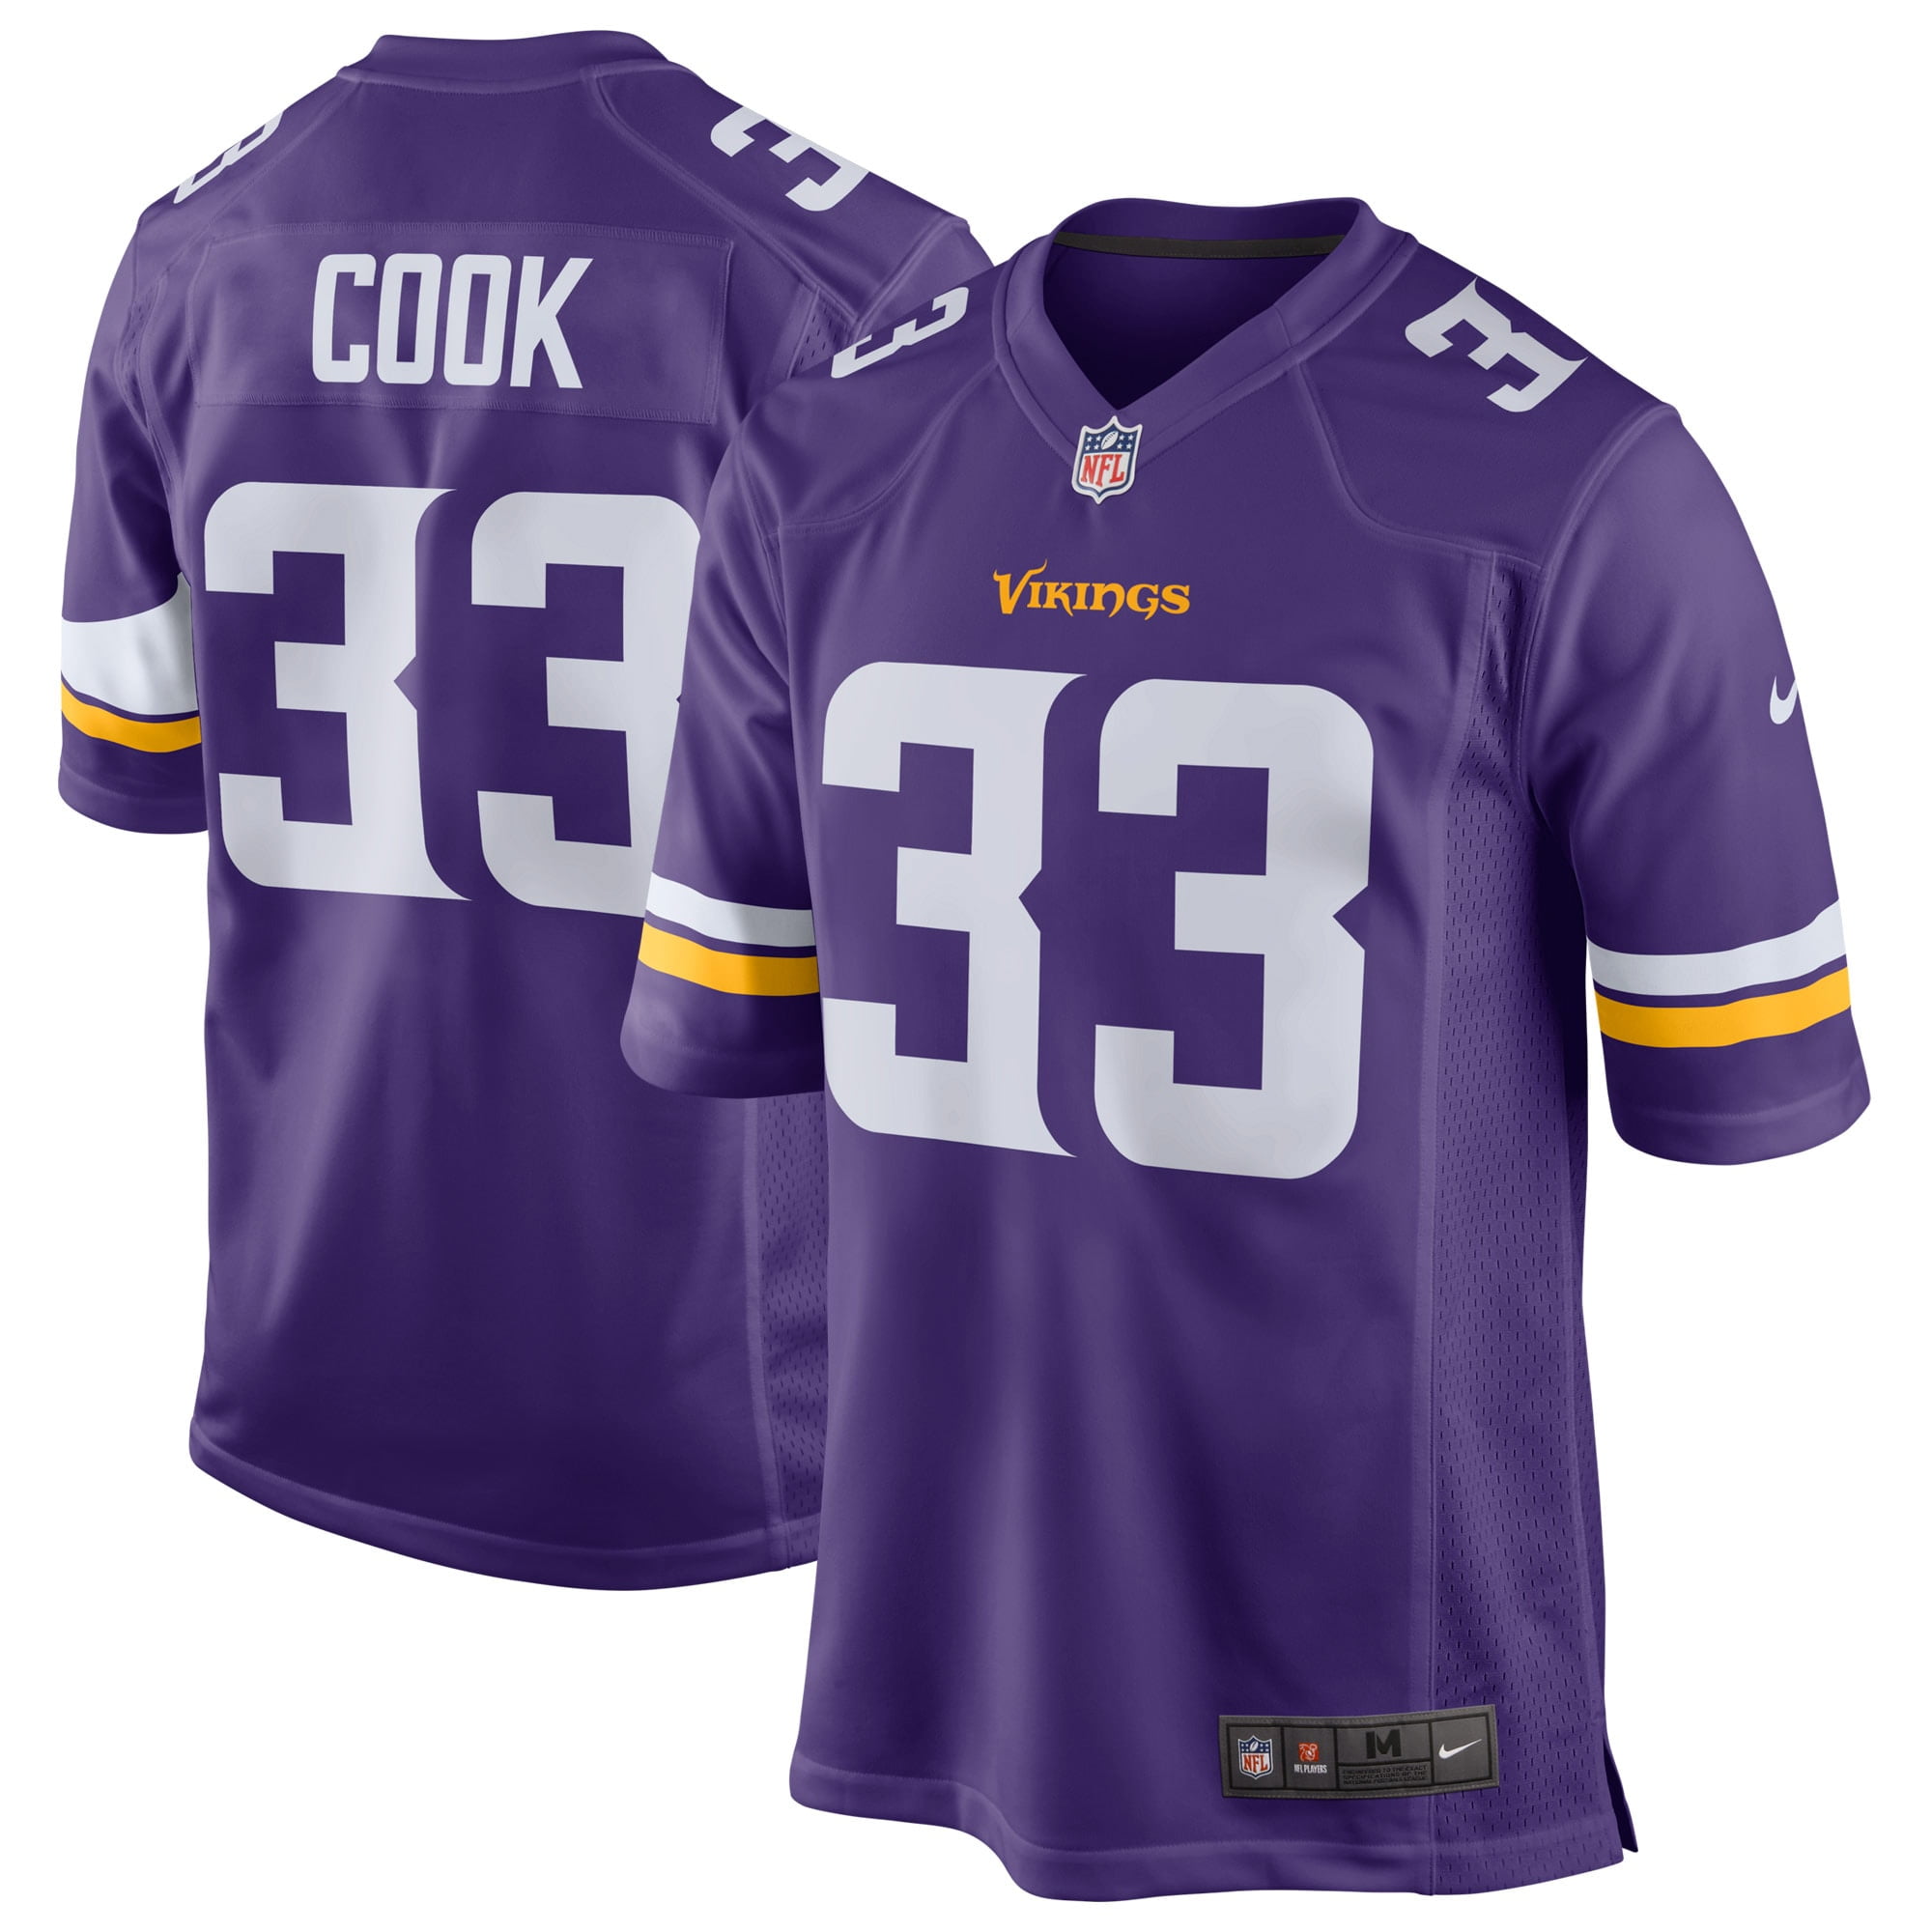 Dalvin Cook Minnesota Vikings Nike Youth Game Jersey - Purple - Walmart.com